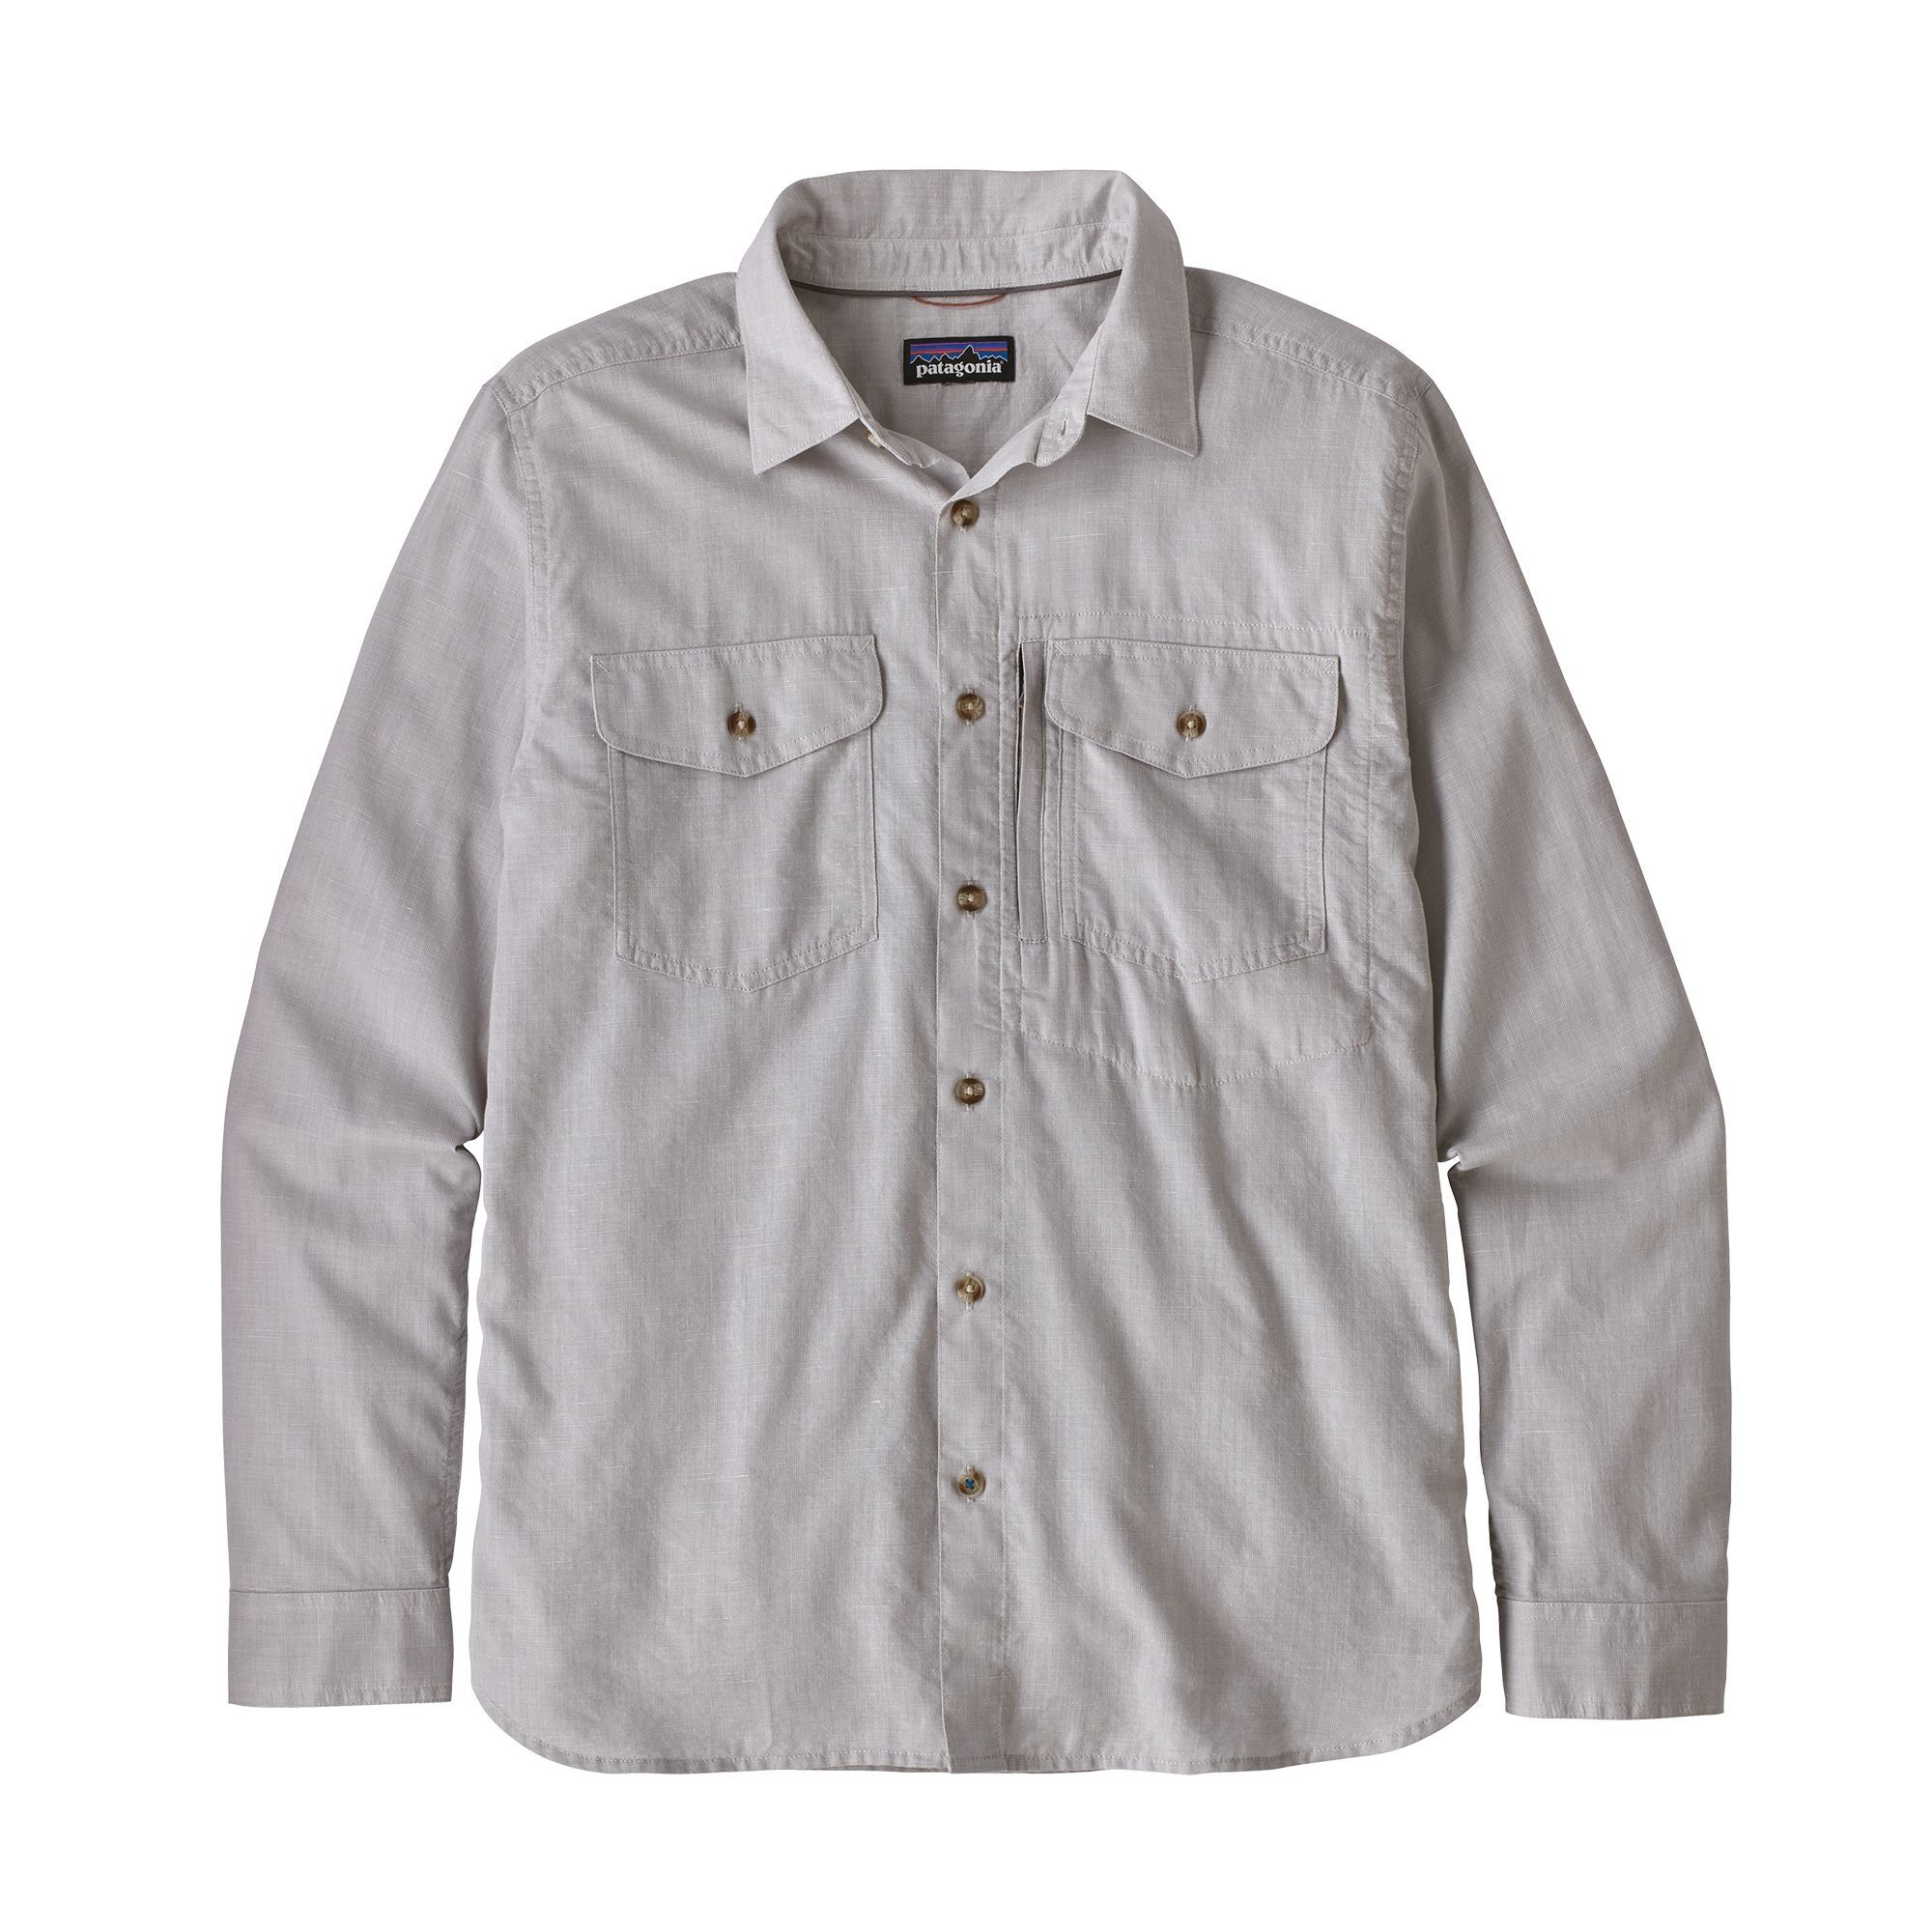 Patagonia Cayo Largo II Shirt, skjorte herre Chambray: Feather Grey 52126-CHFG XL 2019